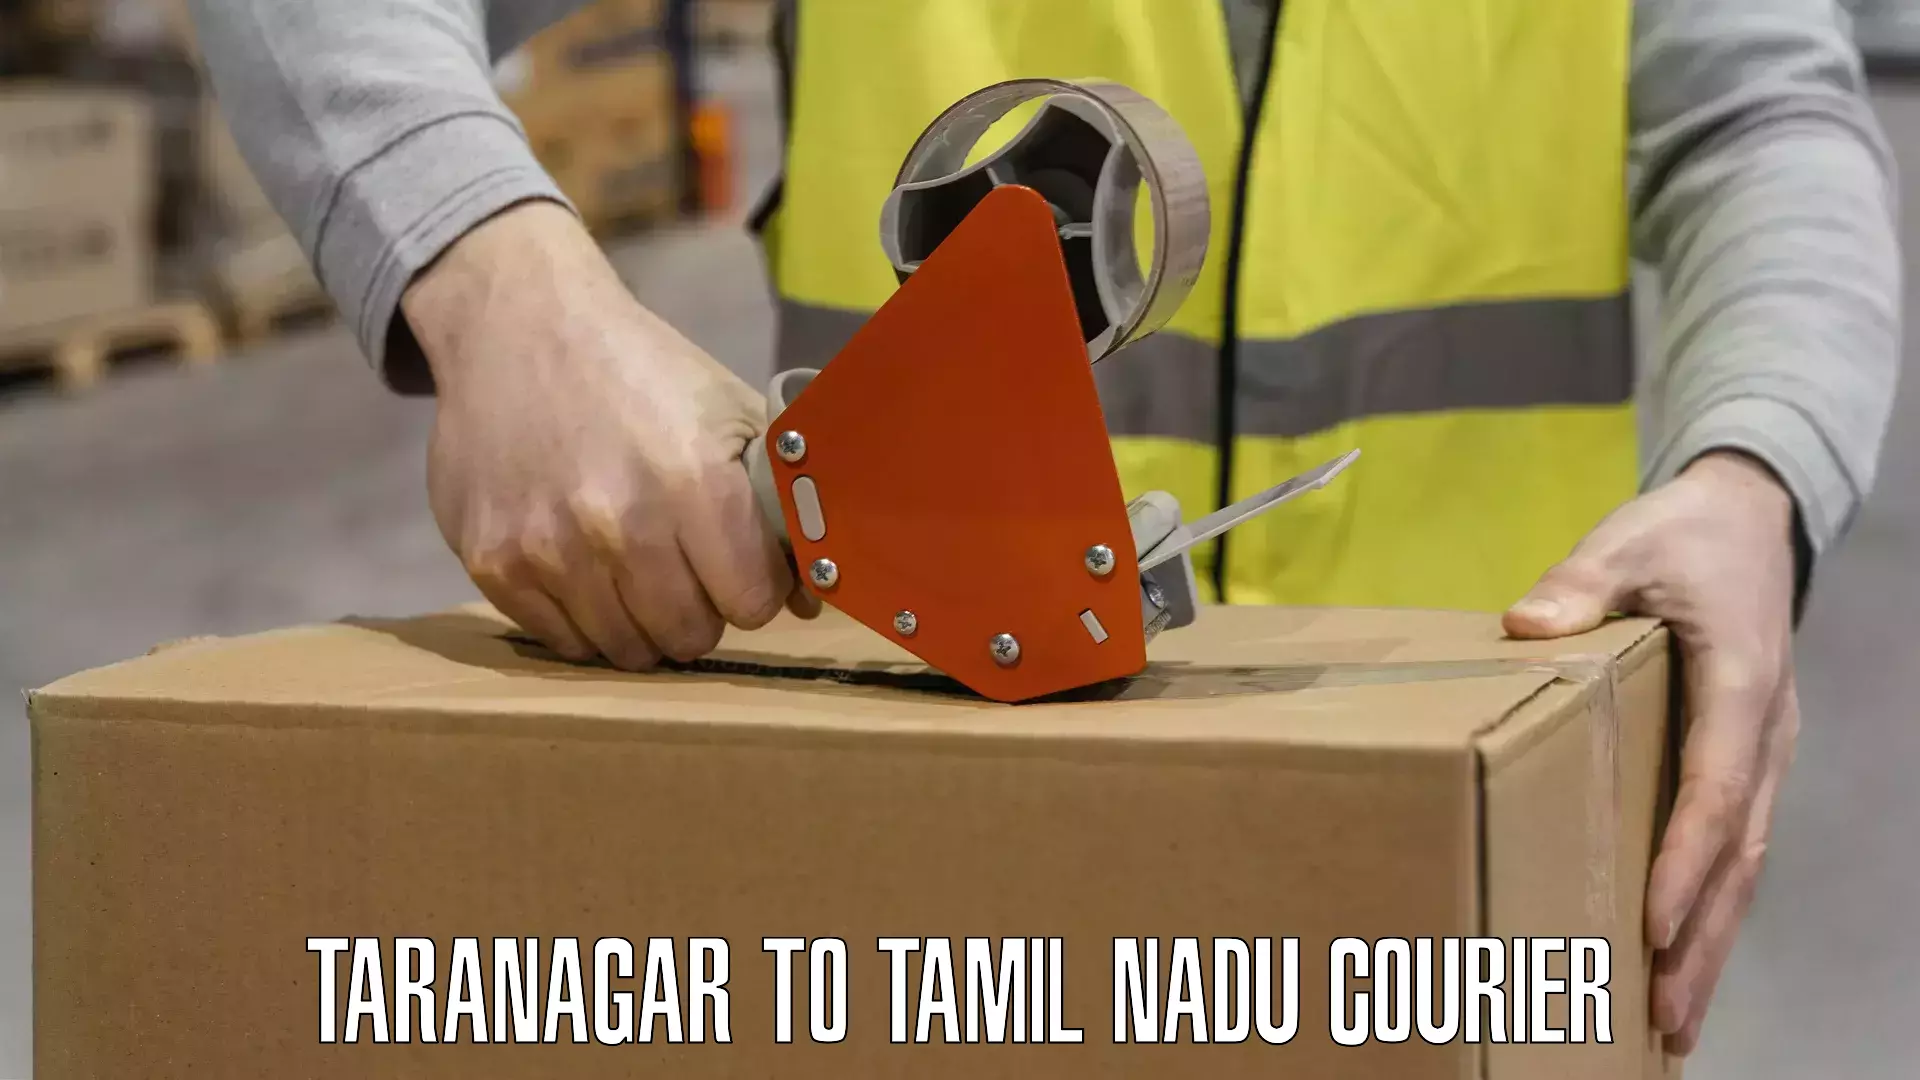 Reliable shipping partners Taranagar to Chennai